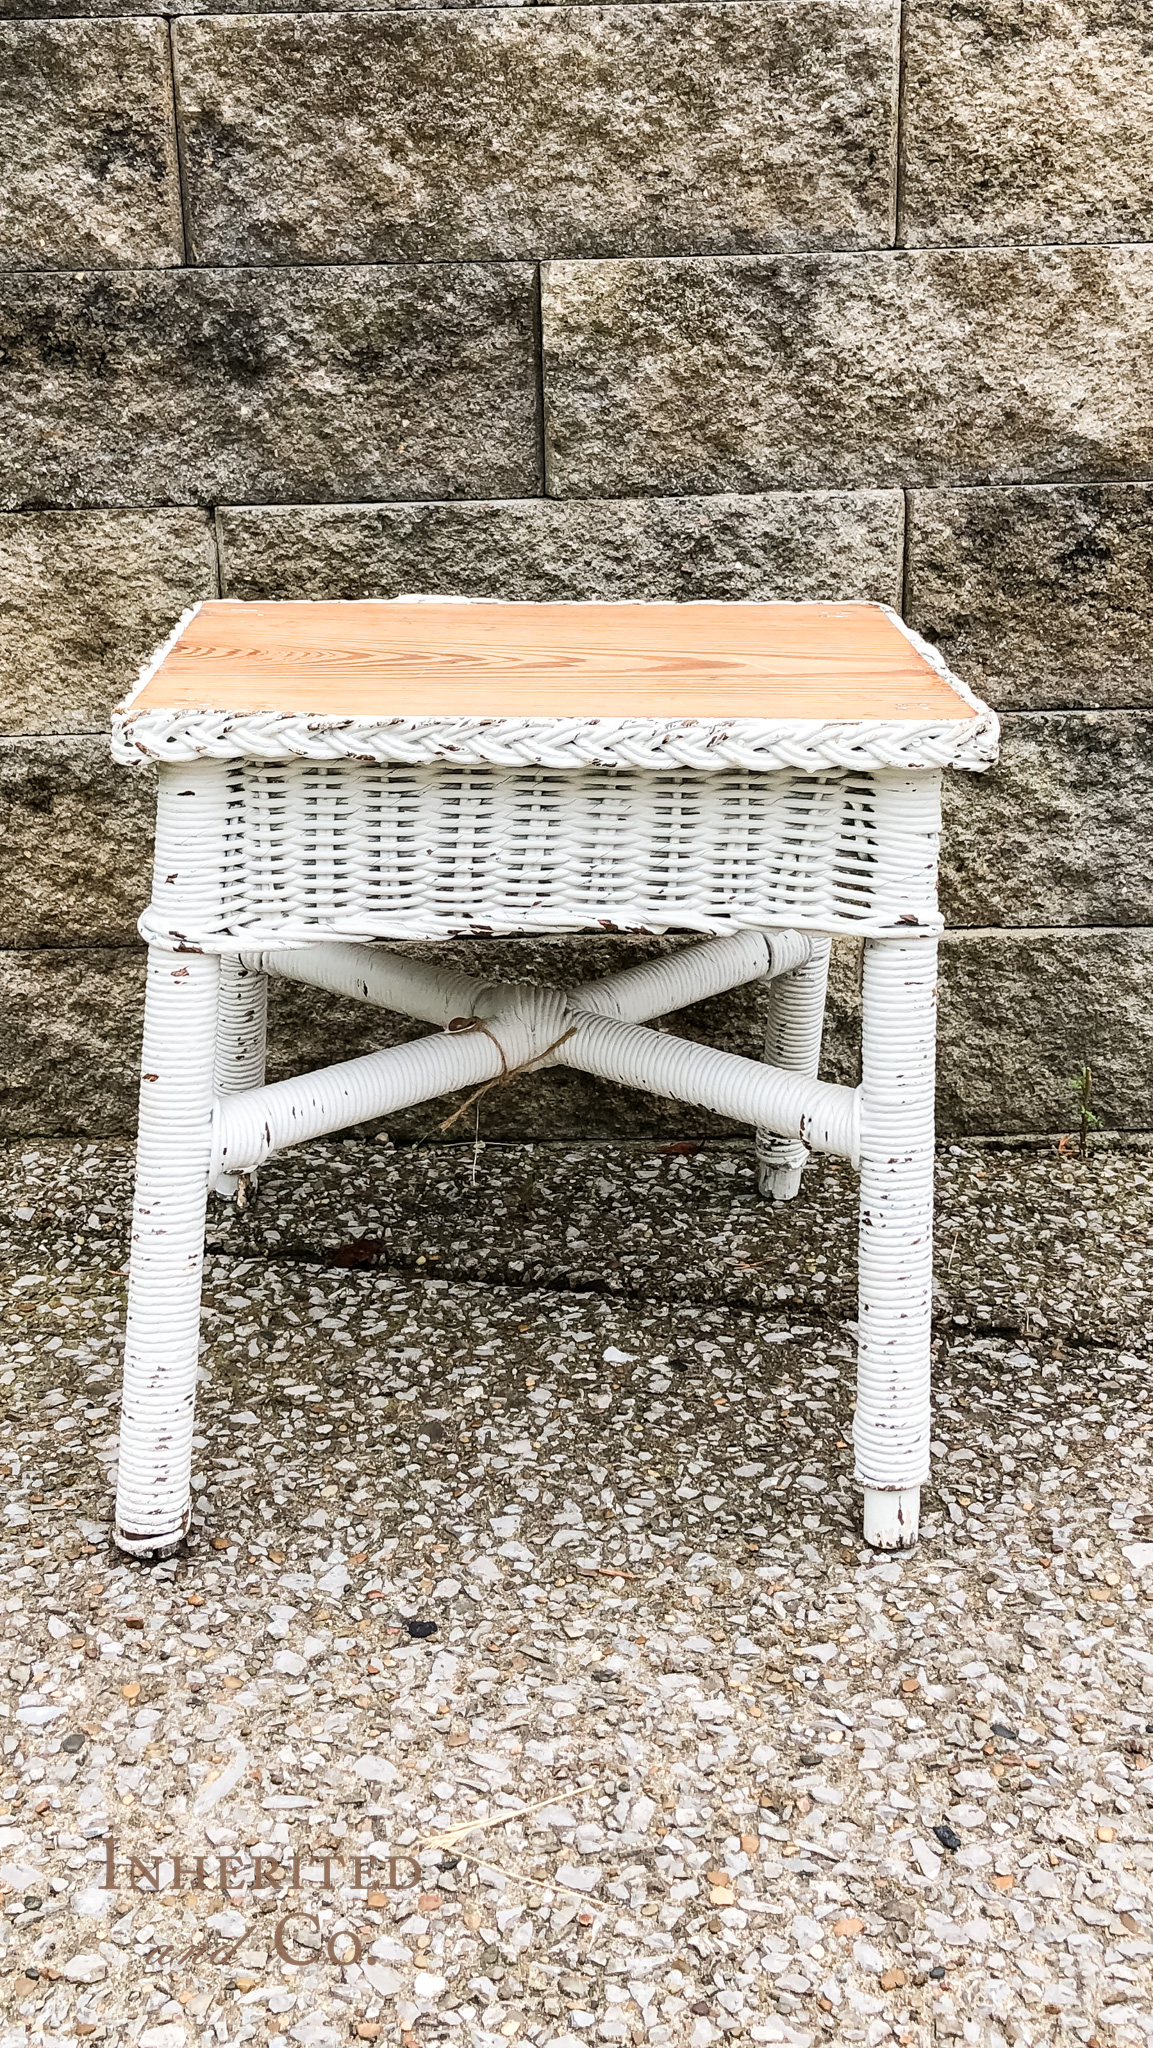 Chippy white, wicker stool found at Vintage Pickin' Spring Market